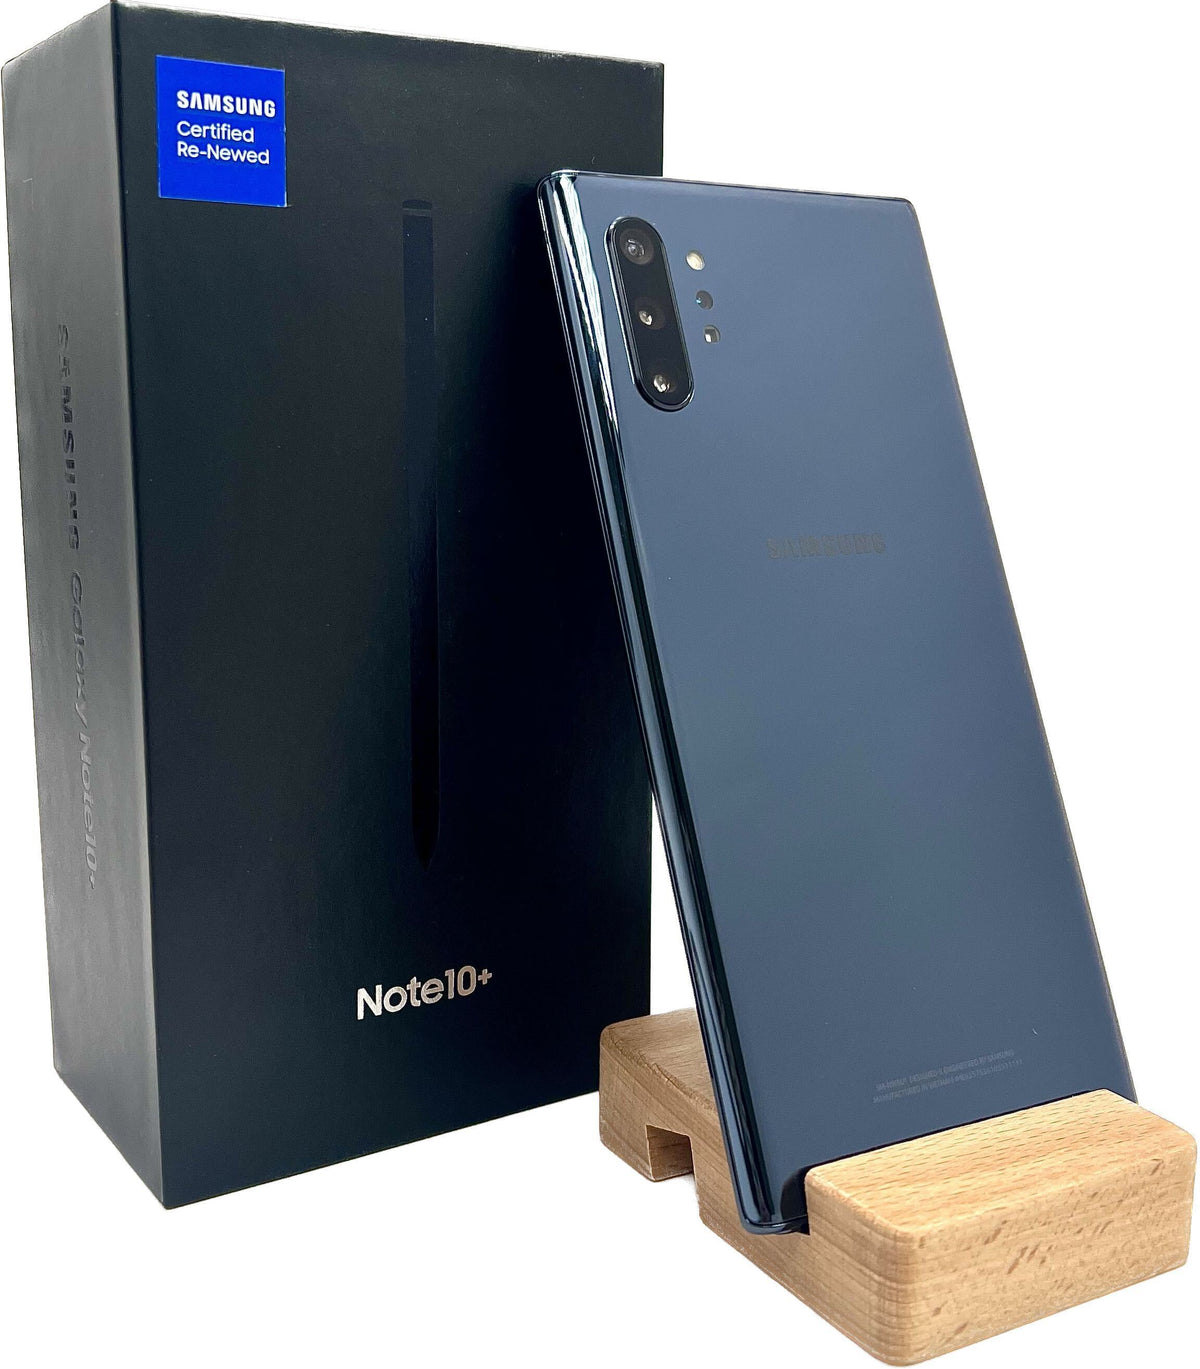 Samsung Galaxy Note 10+ Plus Certified Re-Newed (Unlocked)